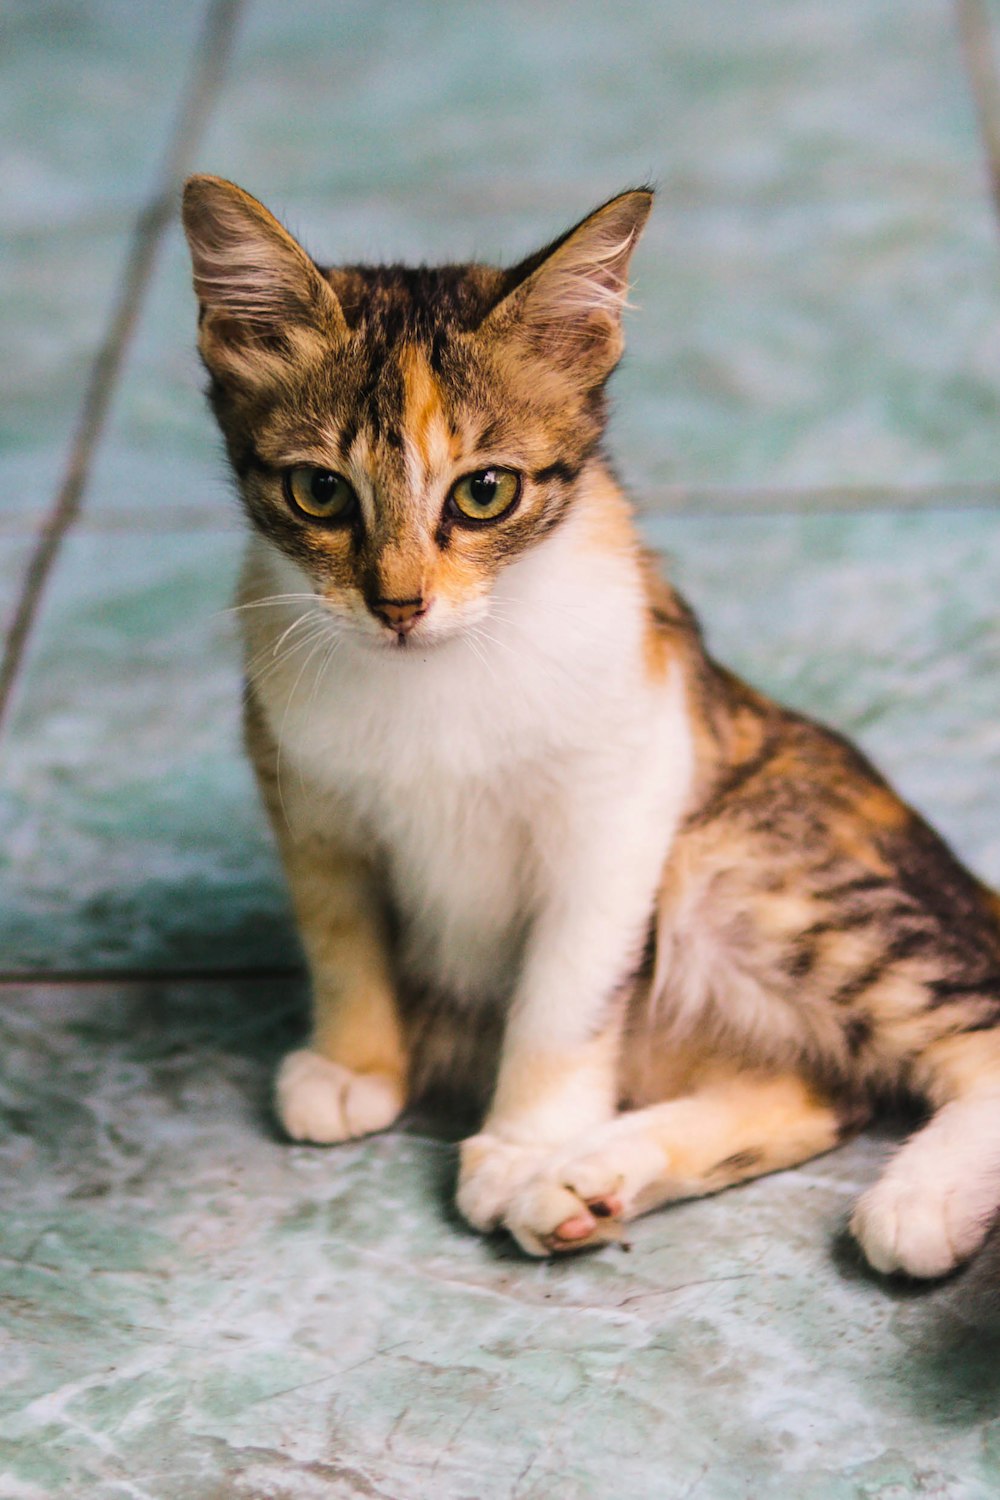 a small kitten sitting on a tiled floor